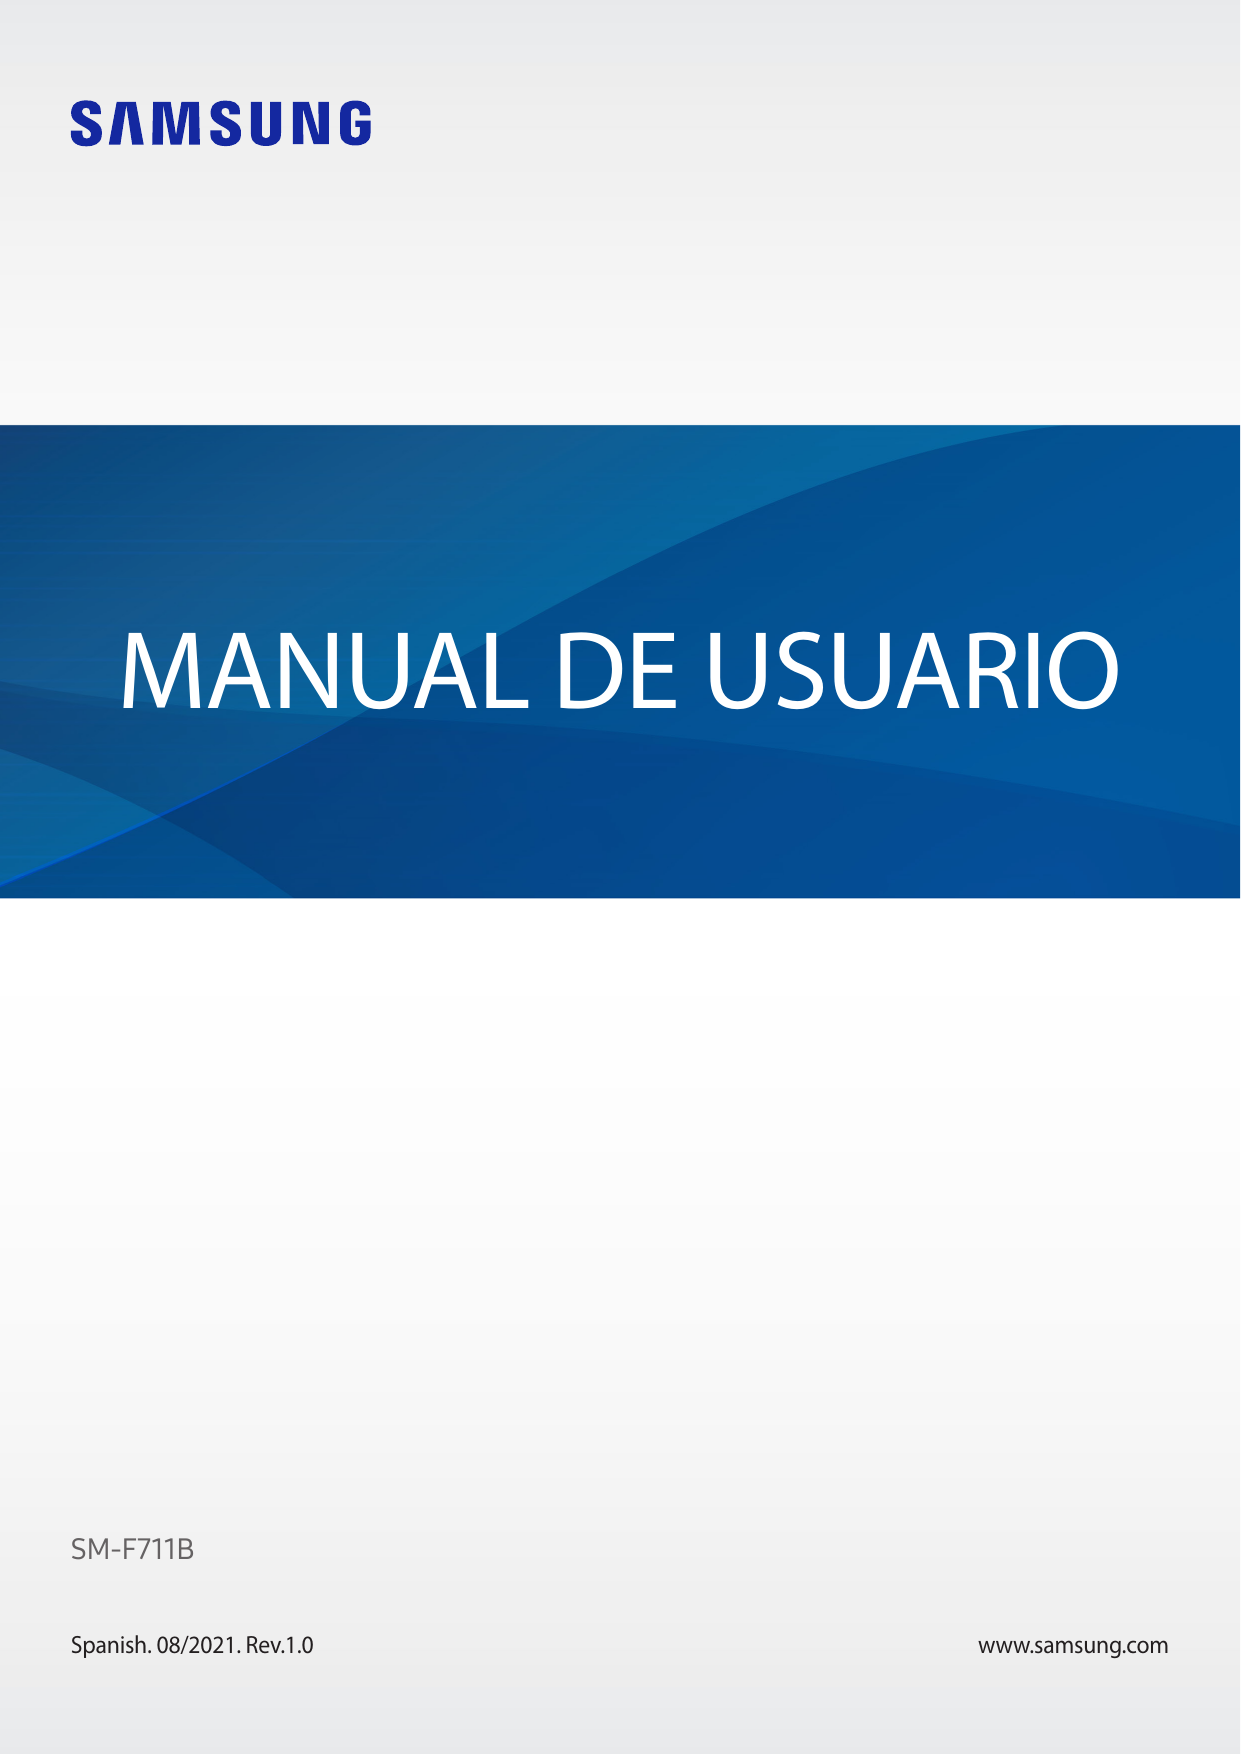 MANUAL DE USUARIOSM-F711BSpanish. 08/2021. Rev.1.0www.samsung.com